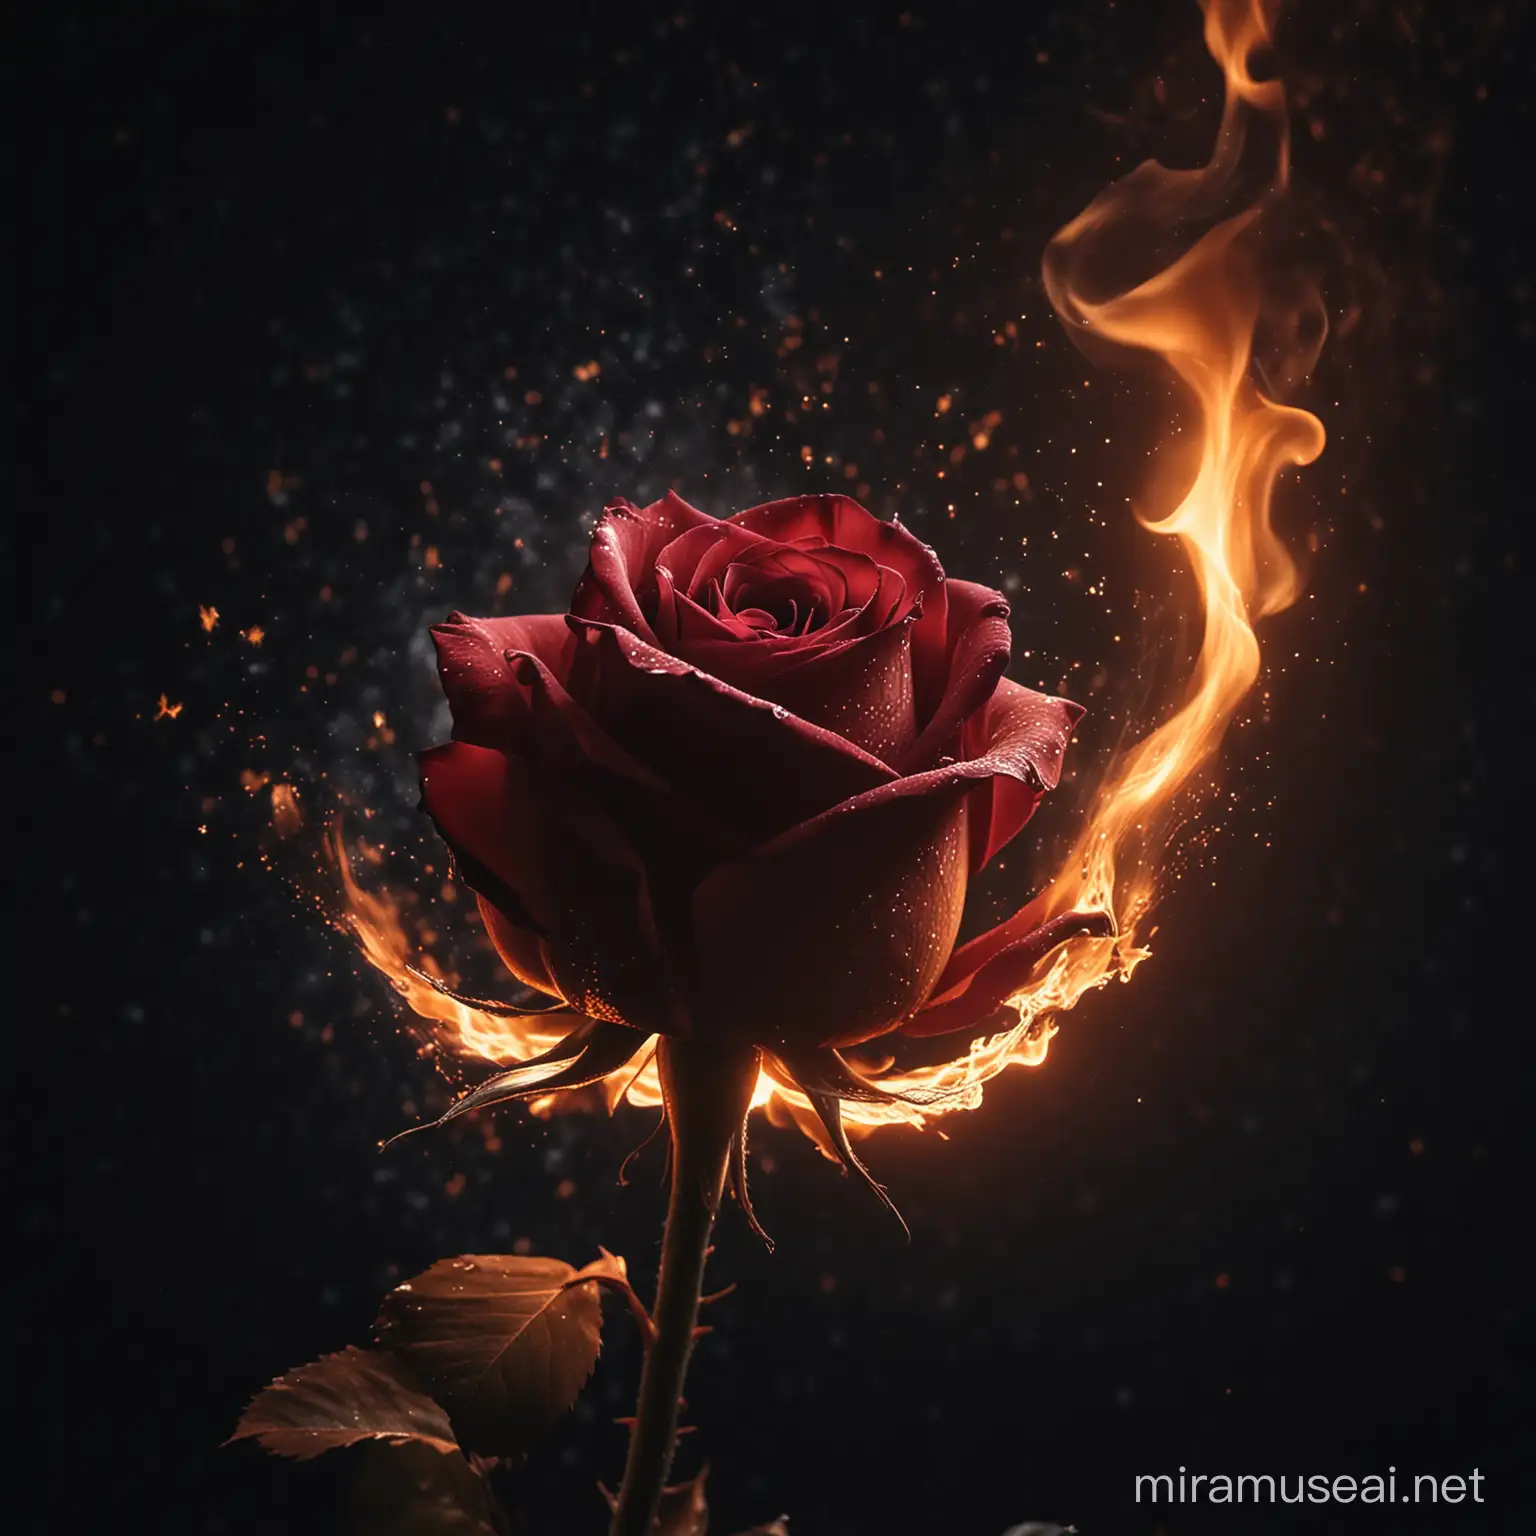 Burning Rose Illuminates Dark Night with Starry Glow